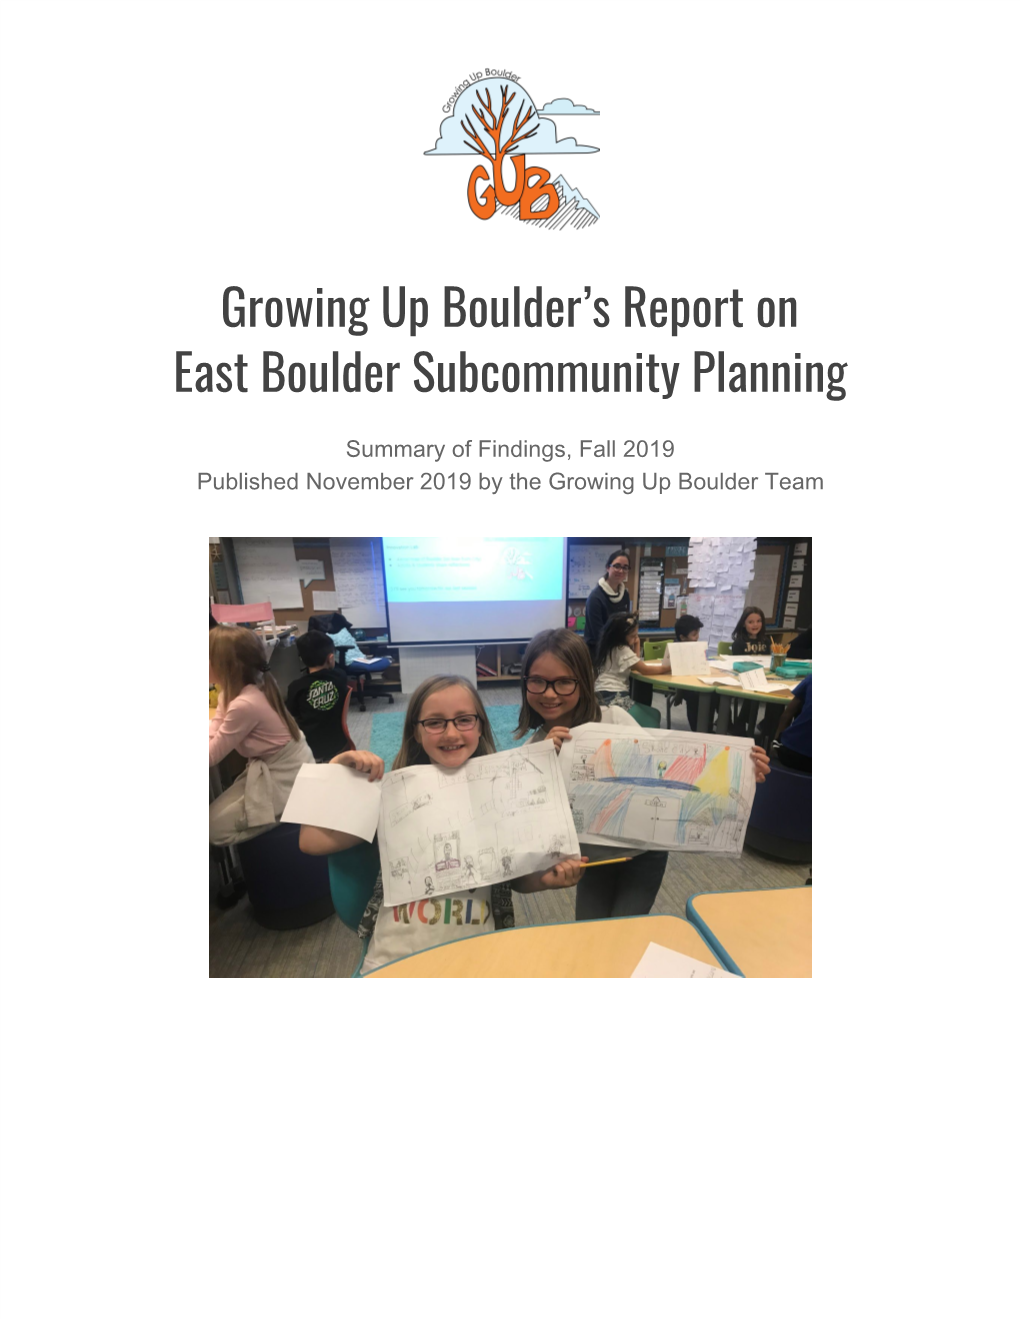 Report on East Boulder Subcommunity